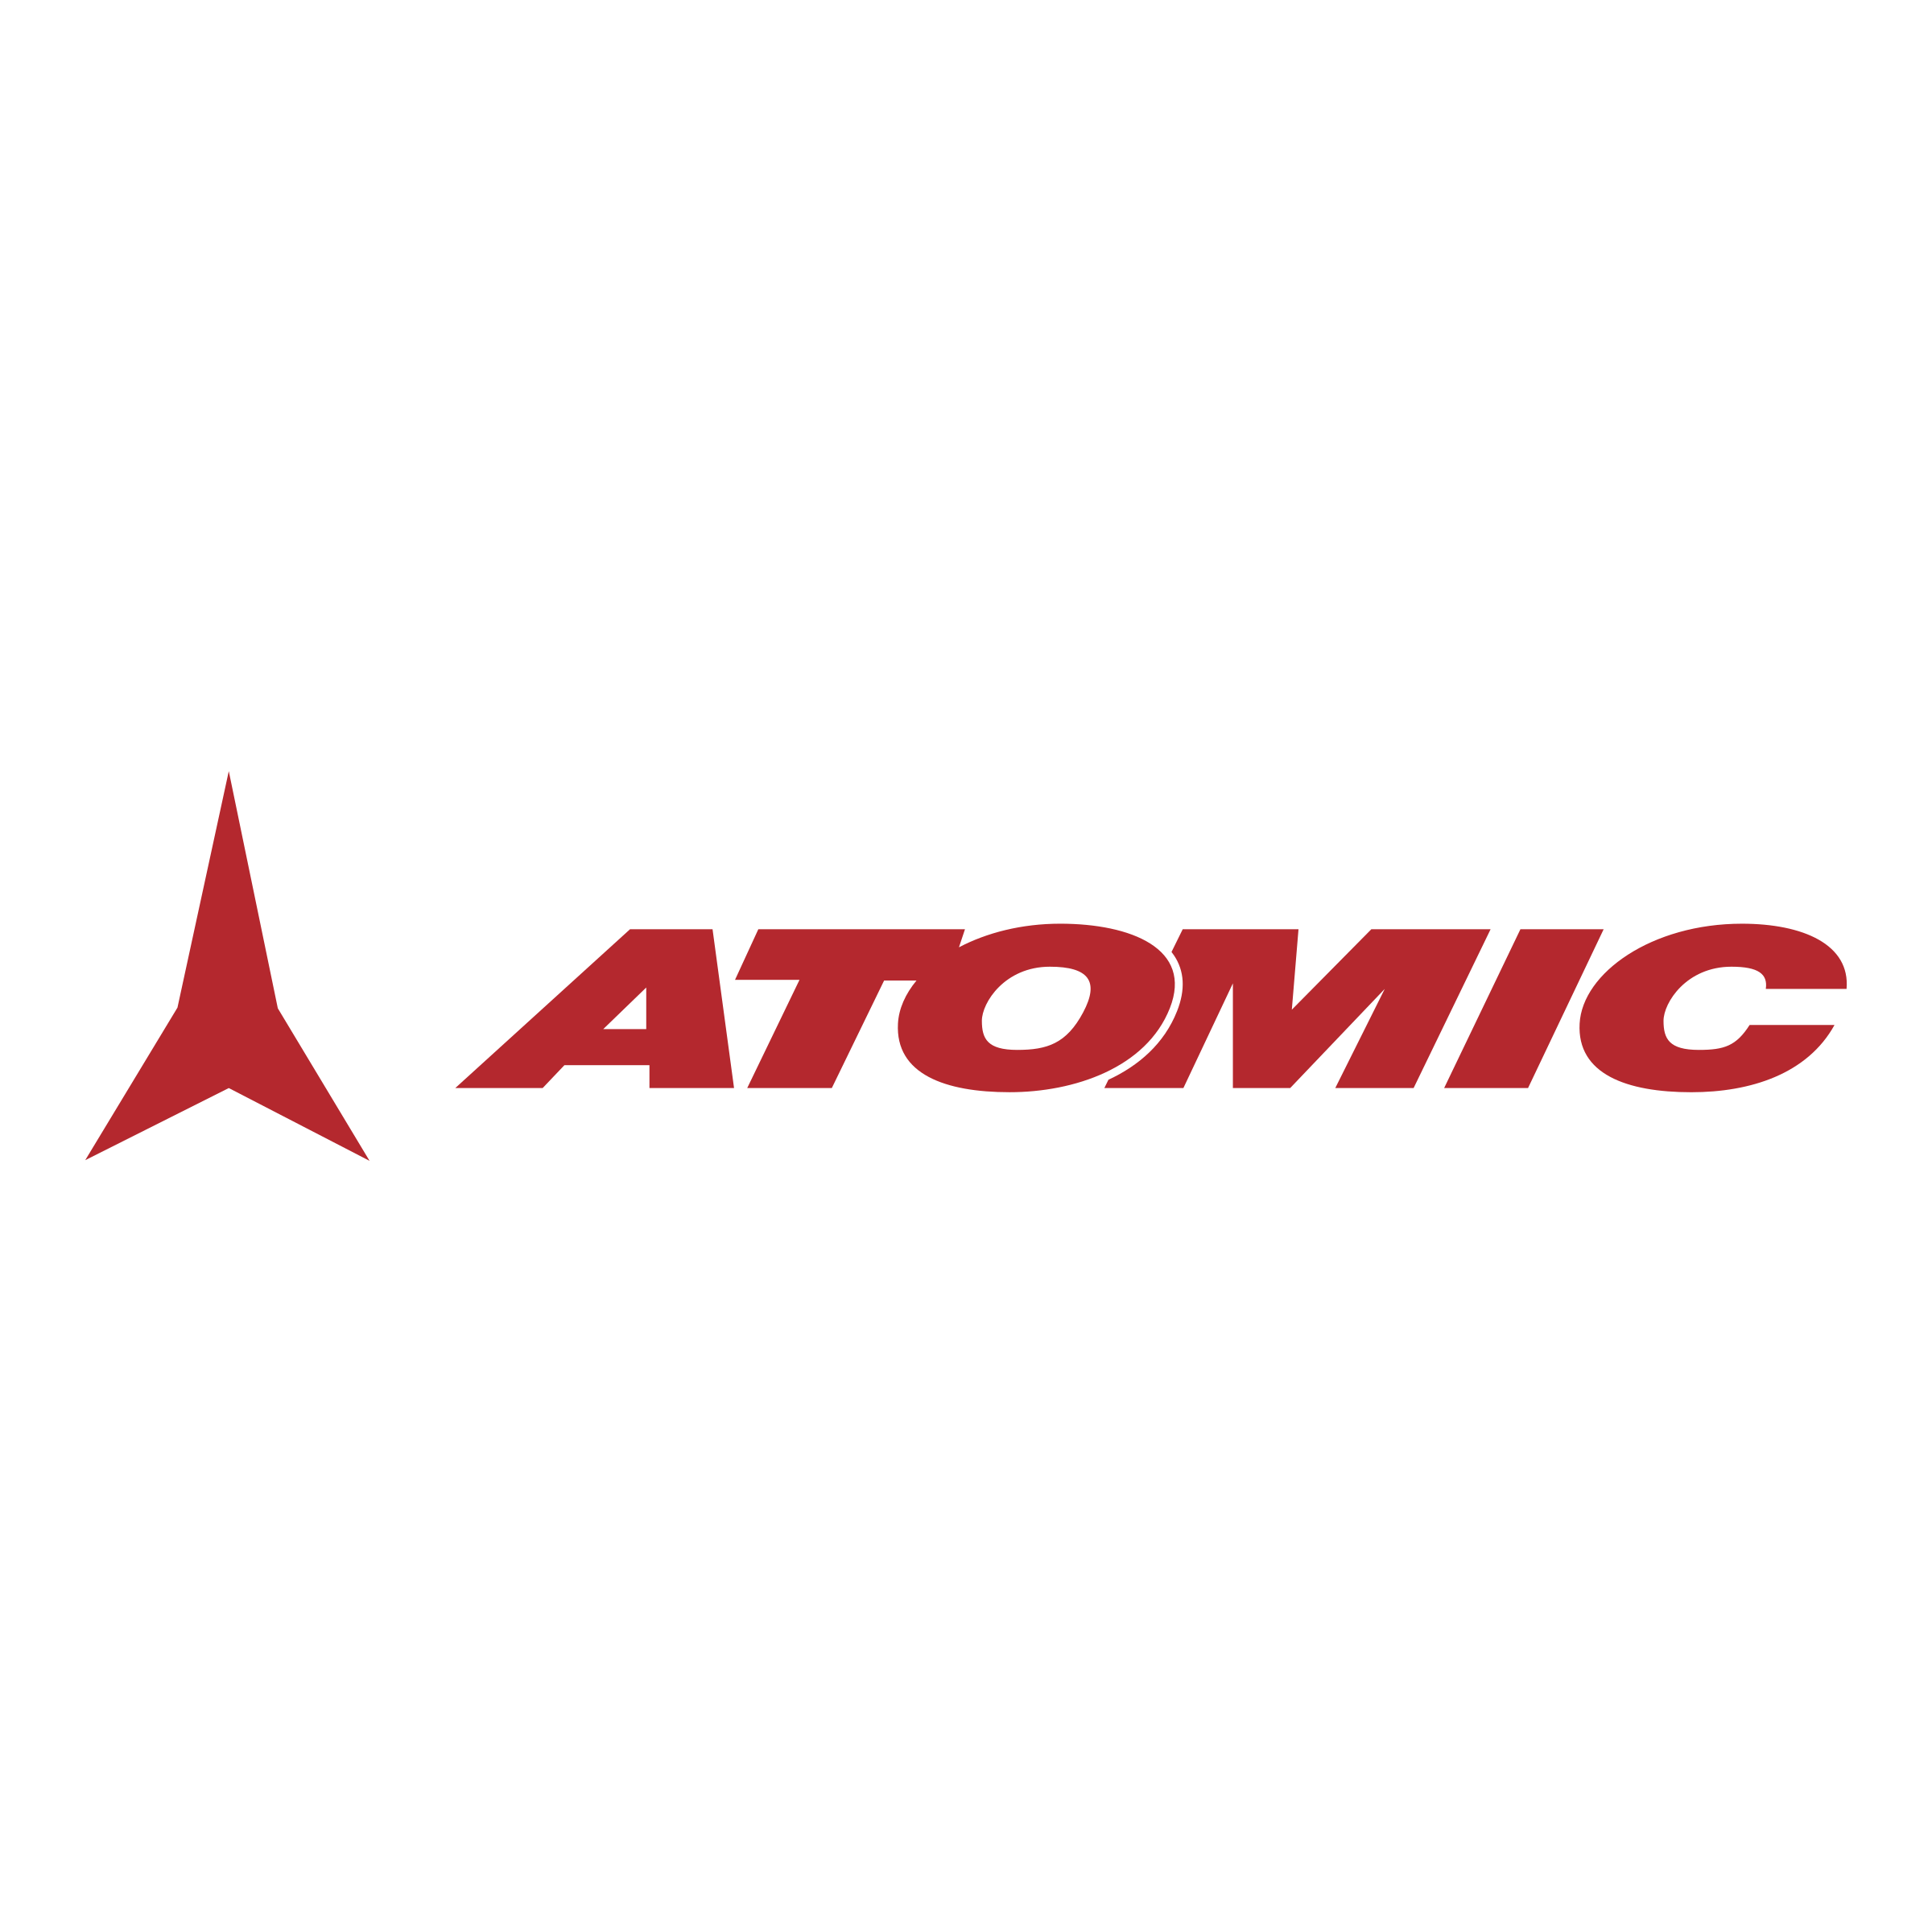 Atomic Logo Png Transparent & Svg Vector   Pluspng Pluspng.com - Atomic, Transparent background PNG HD thumbnail